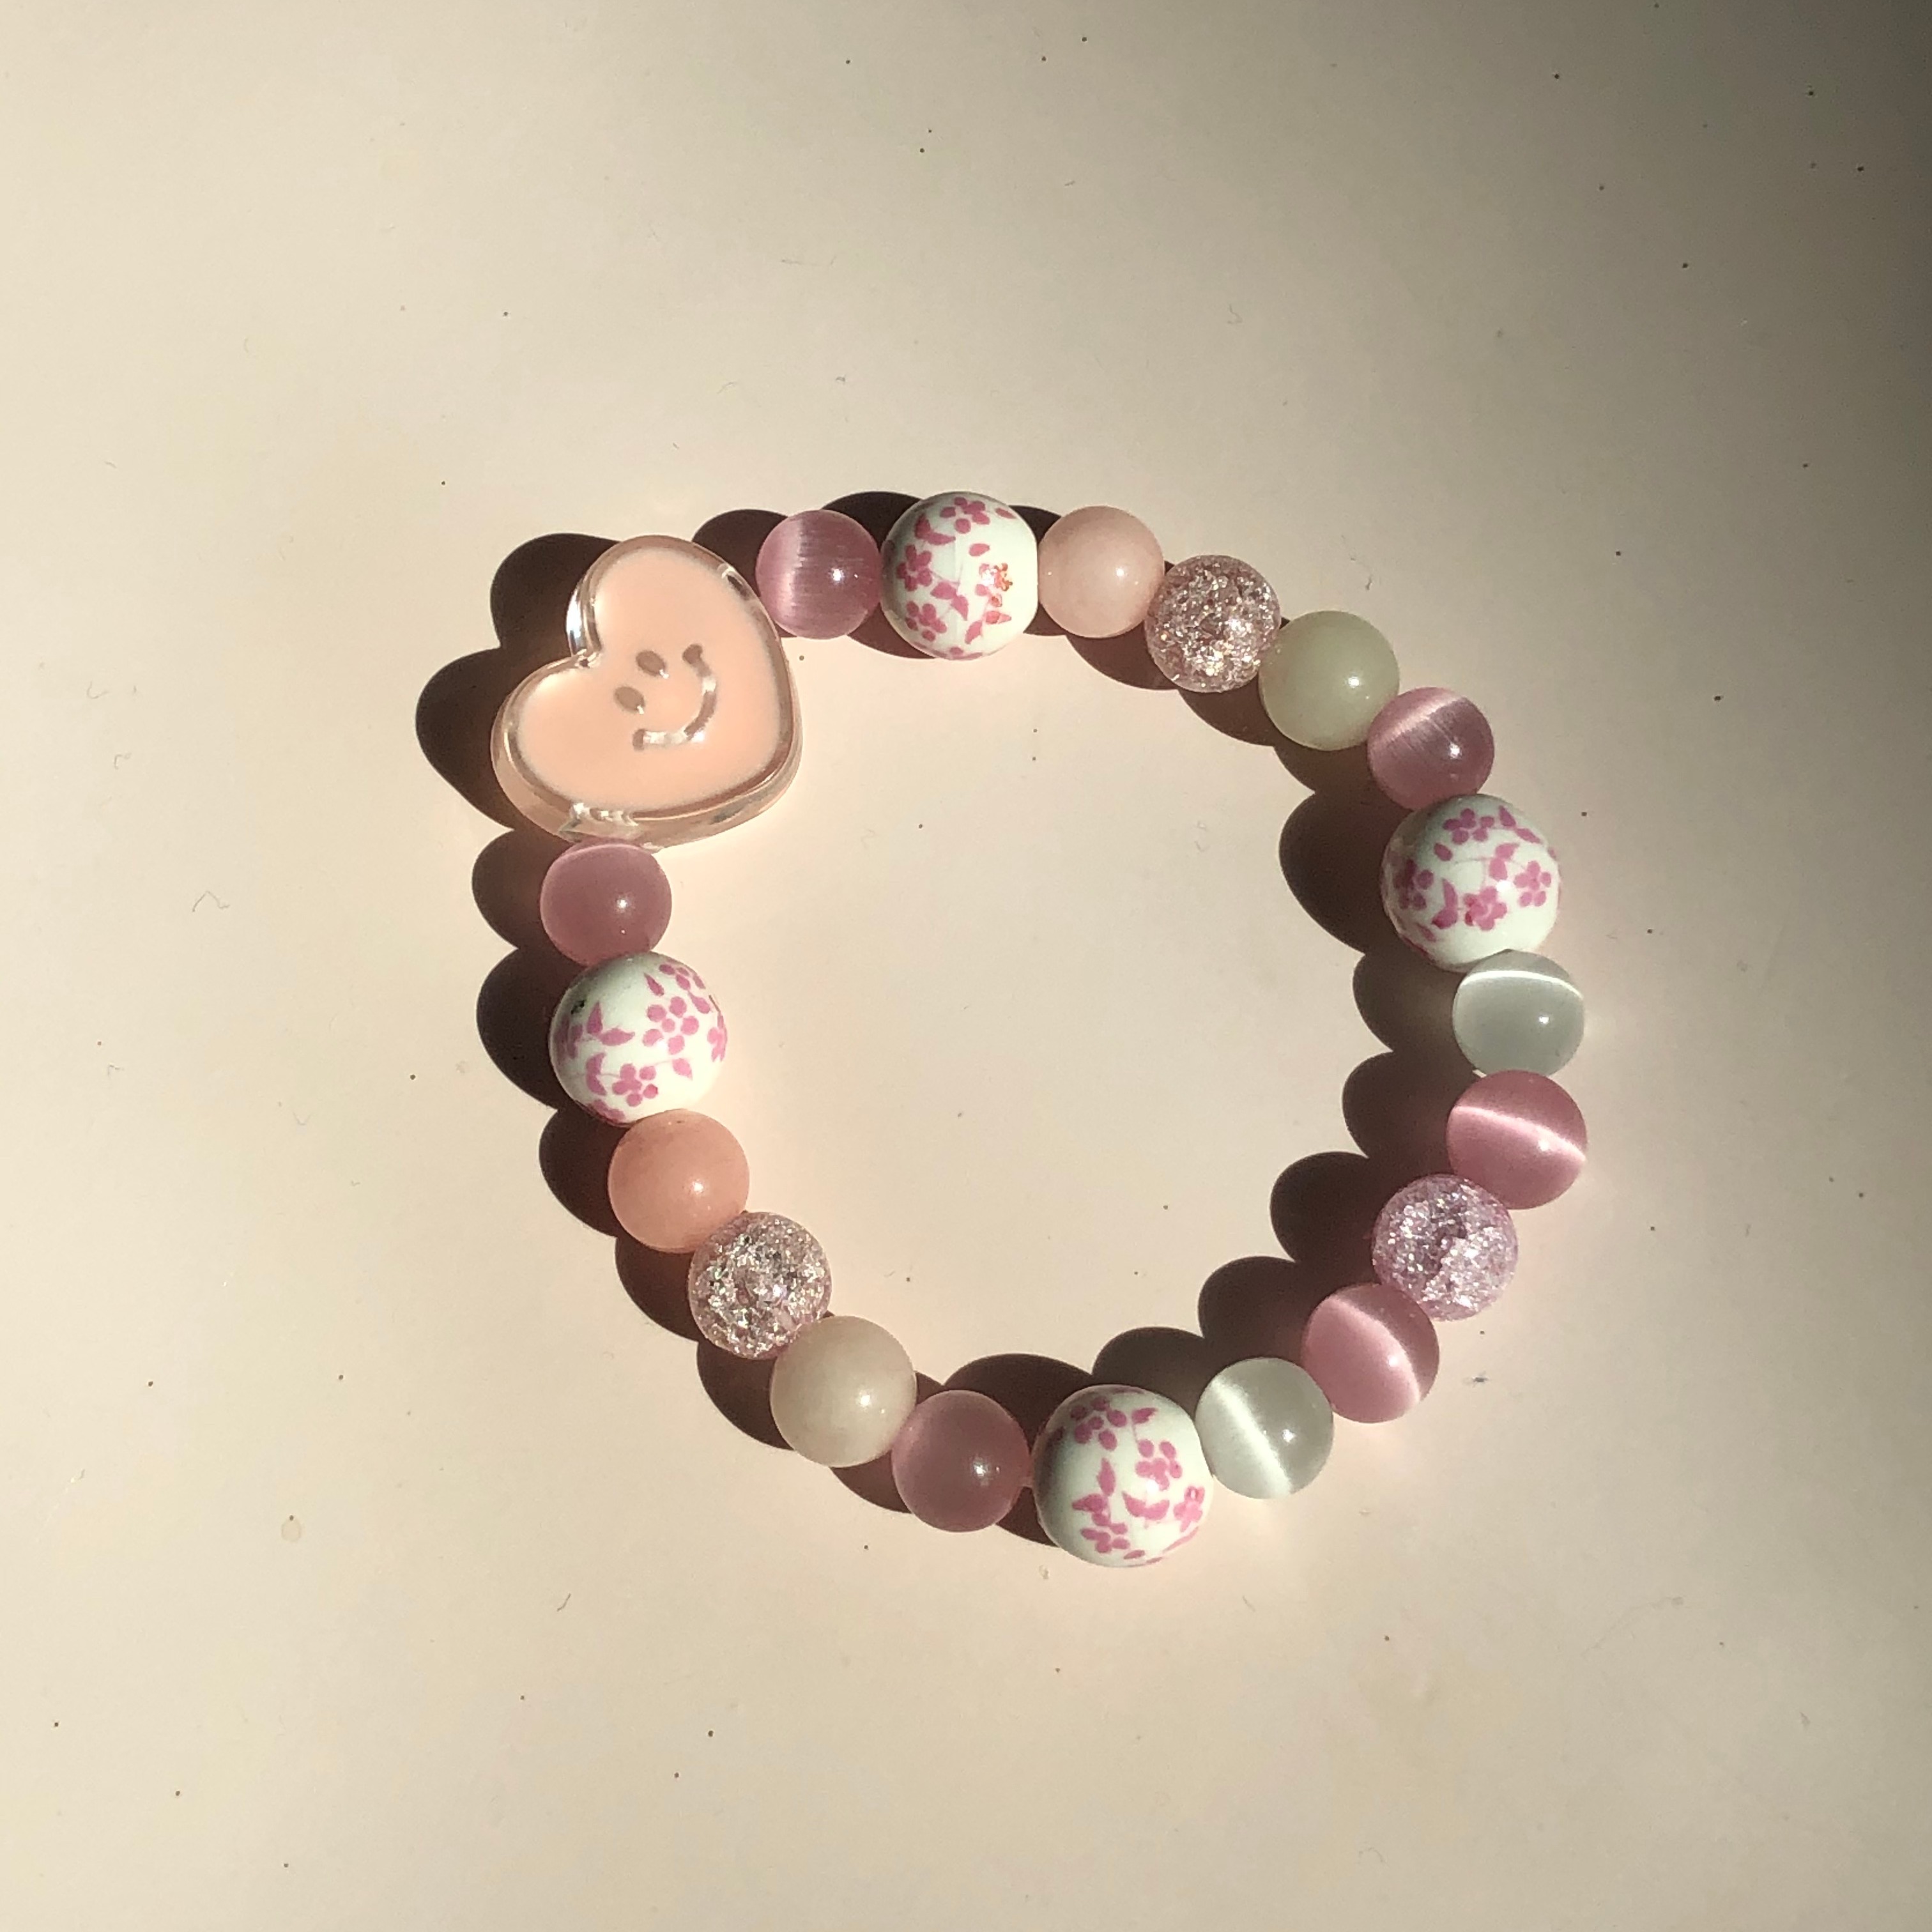 LETSGETAWAY - Lucky Stone Bracelet (Preorder 10 days) *ไม่ต้องเผื่อไซส์นะคะ* / กำไลข้อมือหินมงคล สุดน่ารัก รุ่น Cherry Blossom (สินค้าจัดส่งหลังสั่งซื้อ 10 วัน ทำการ)